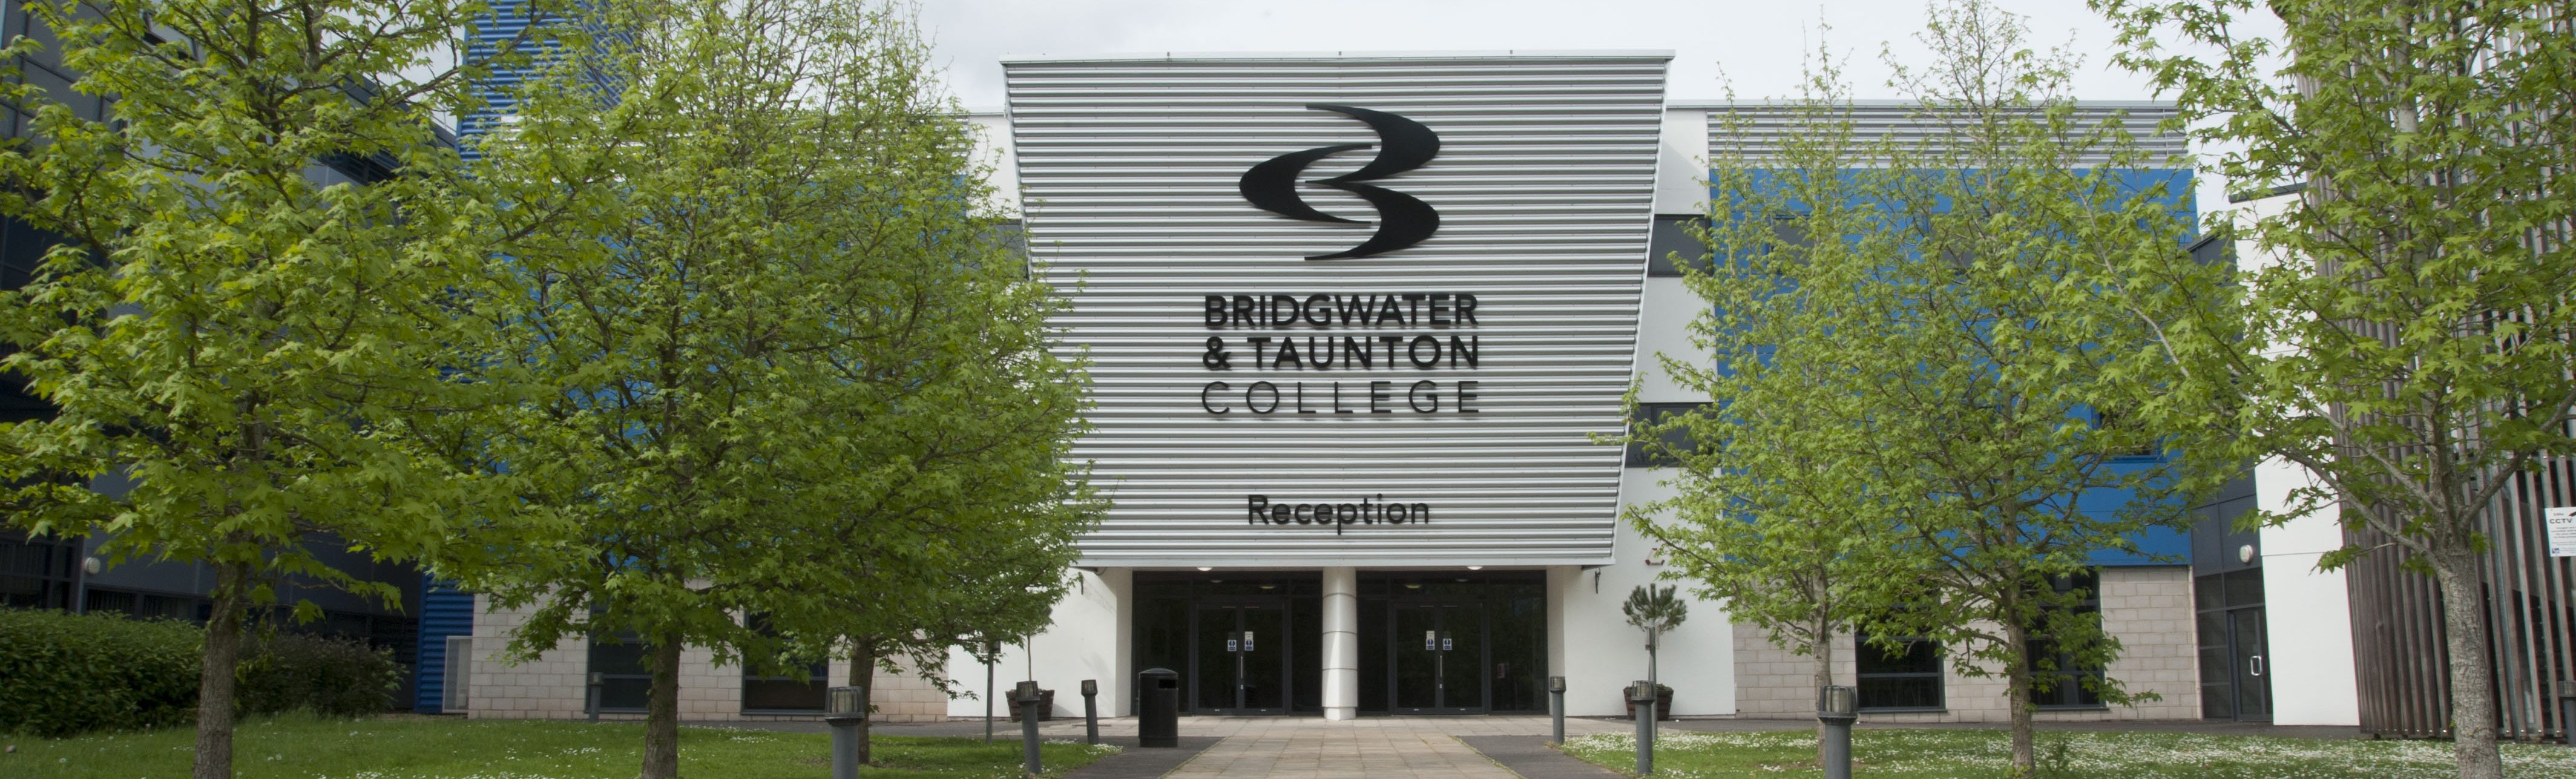 Taunton campus main entrance